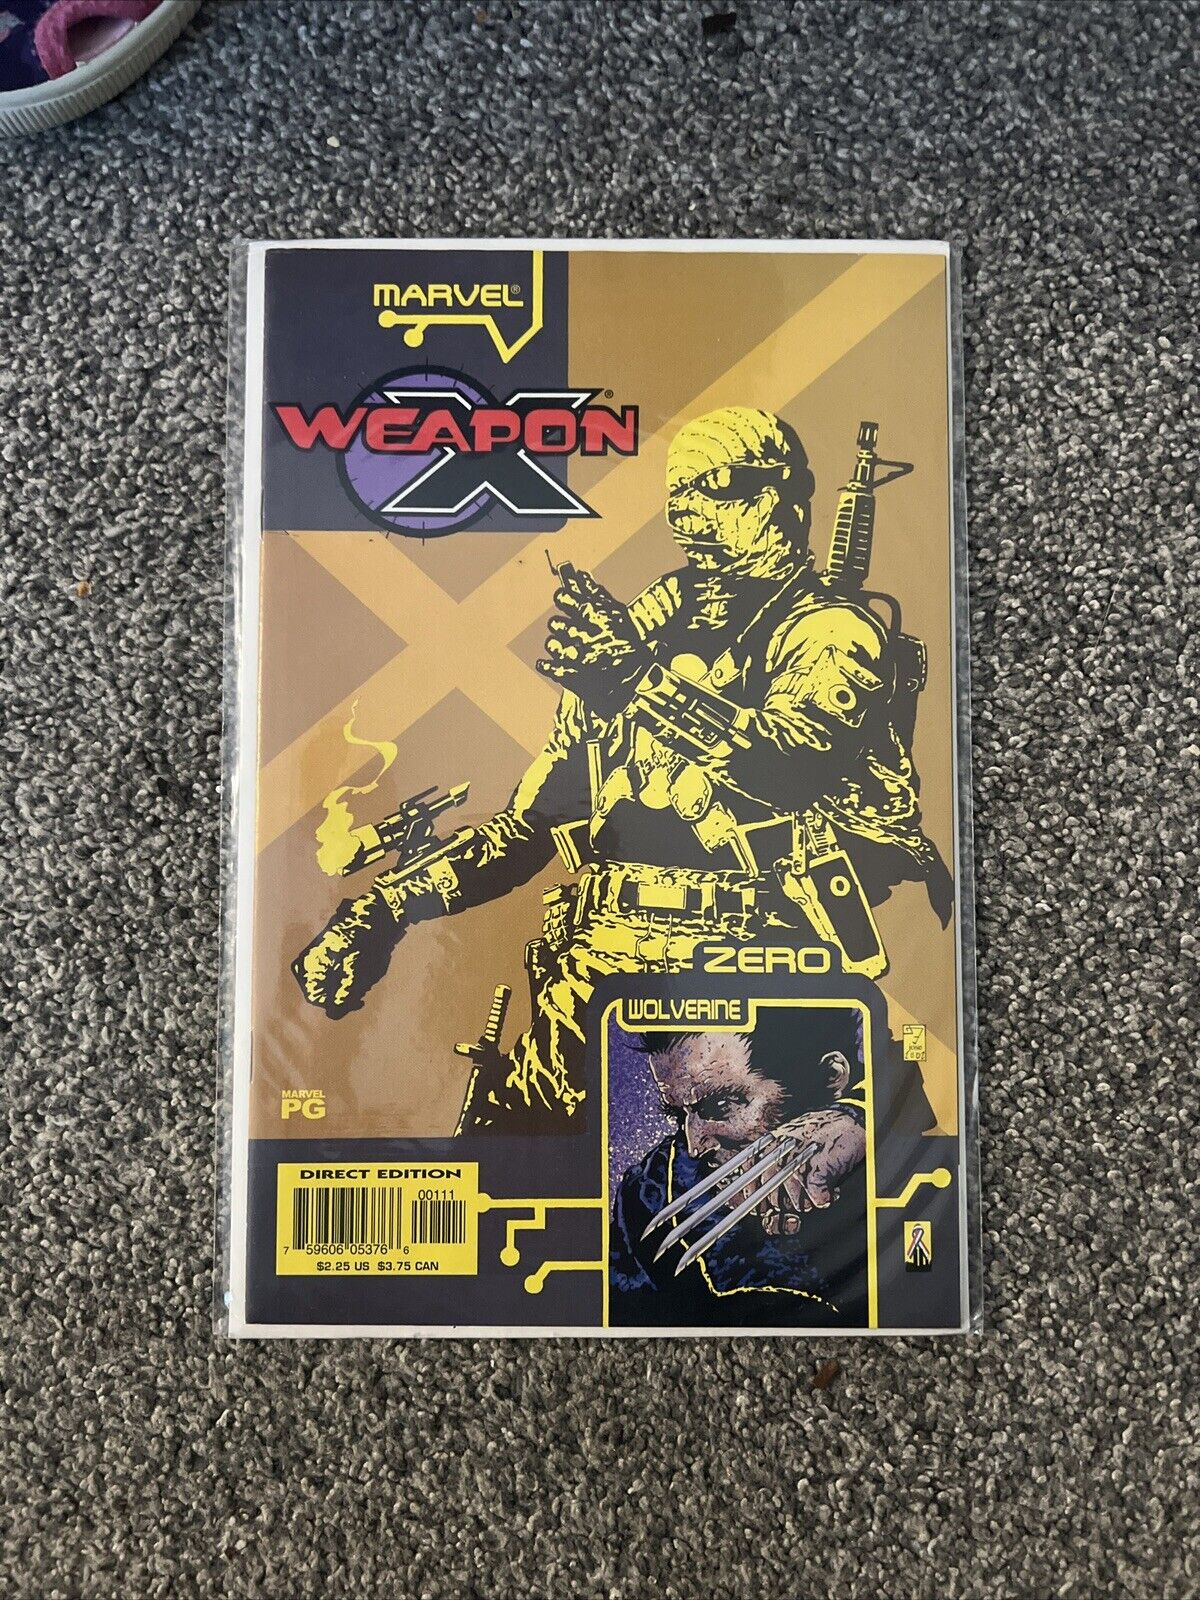 WEAPON X AGENT ZERO #1 Wolverine Rare Kilian Plunkett Terry Austin JH Williams